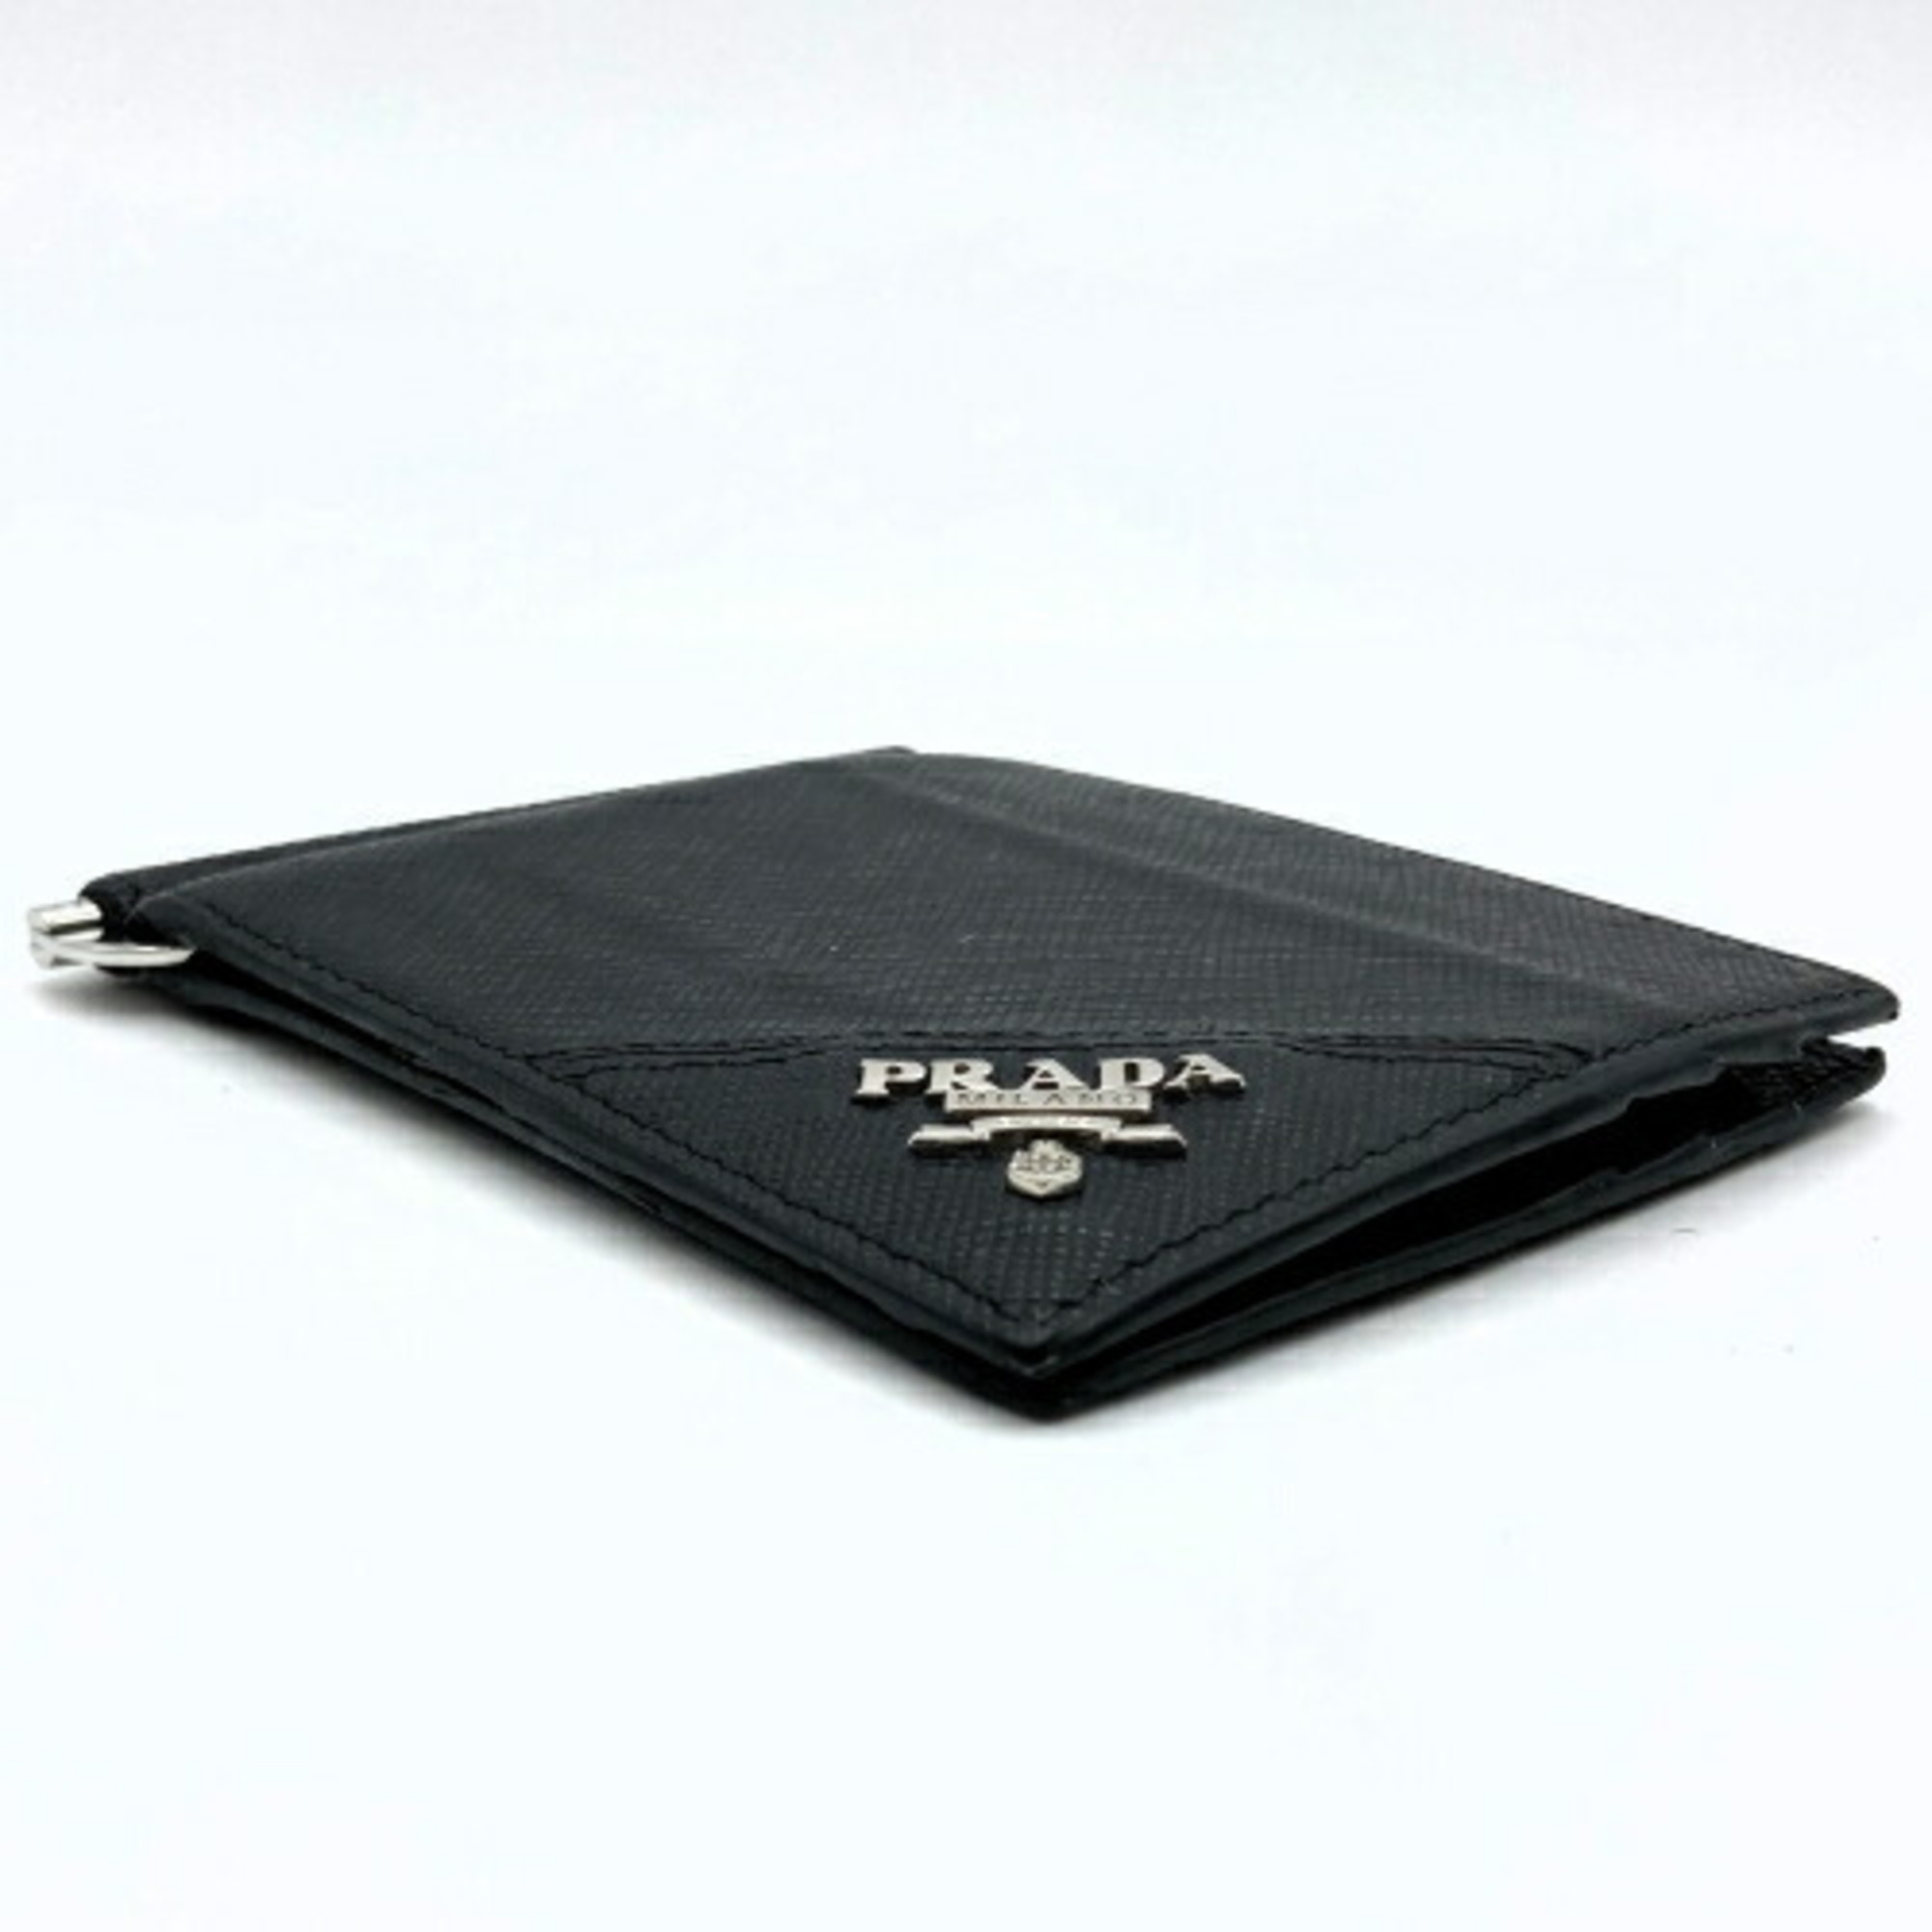 PRADA Prada business card holder/card case bi-fold holder black saffiano leather men women ITDOJLJ6Z0W5